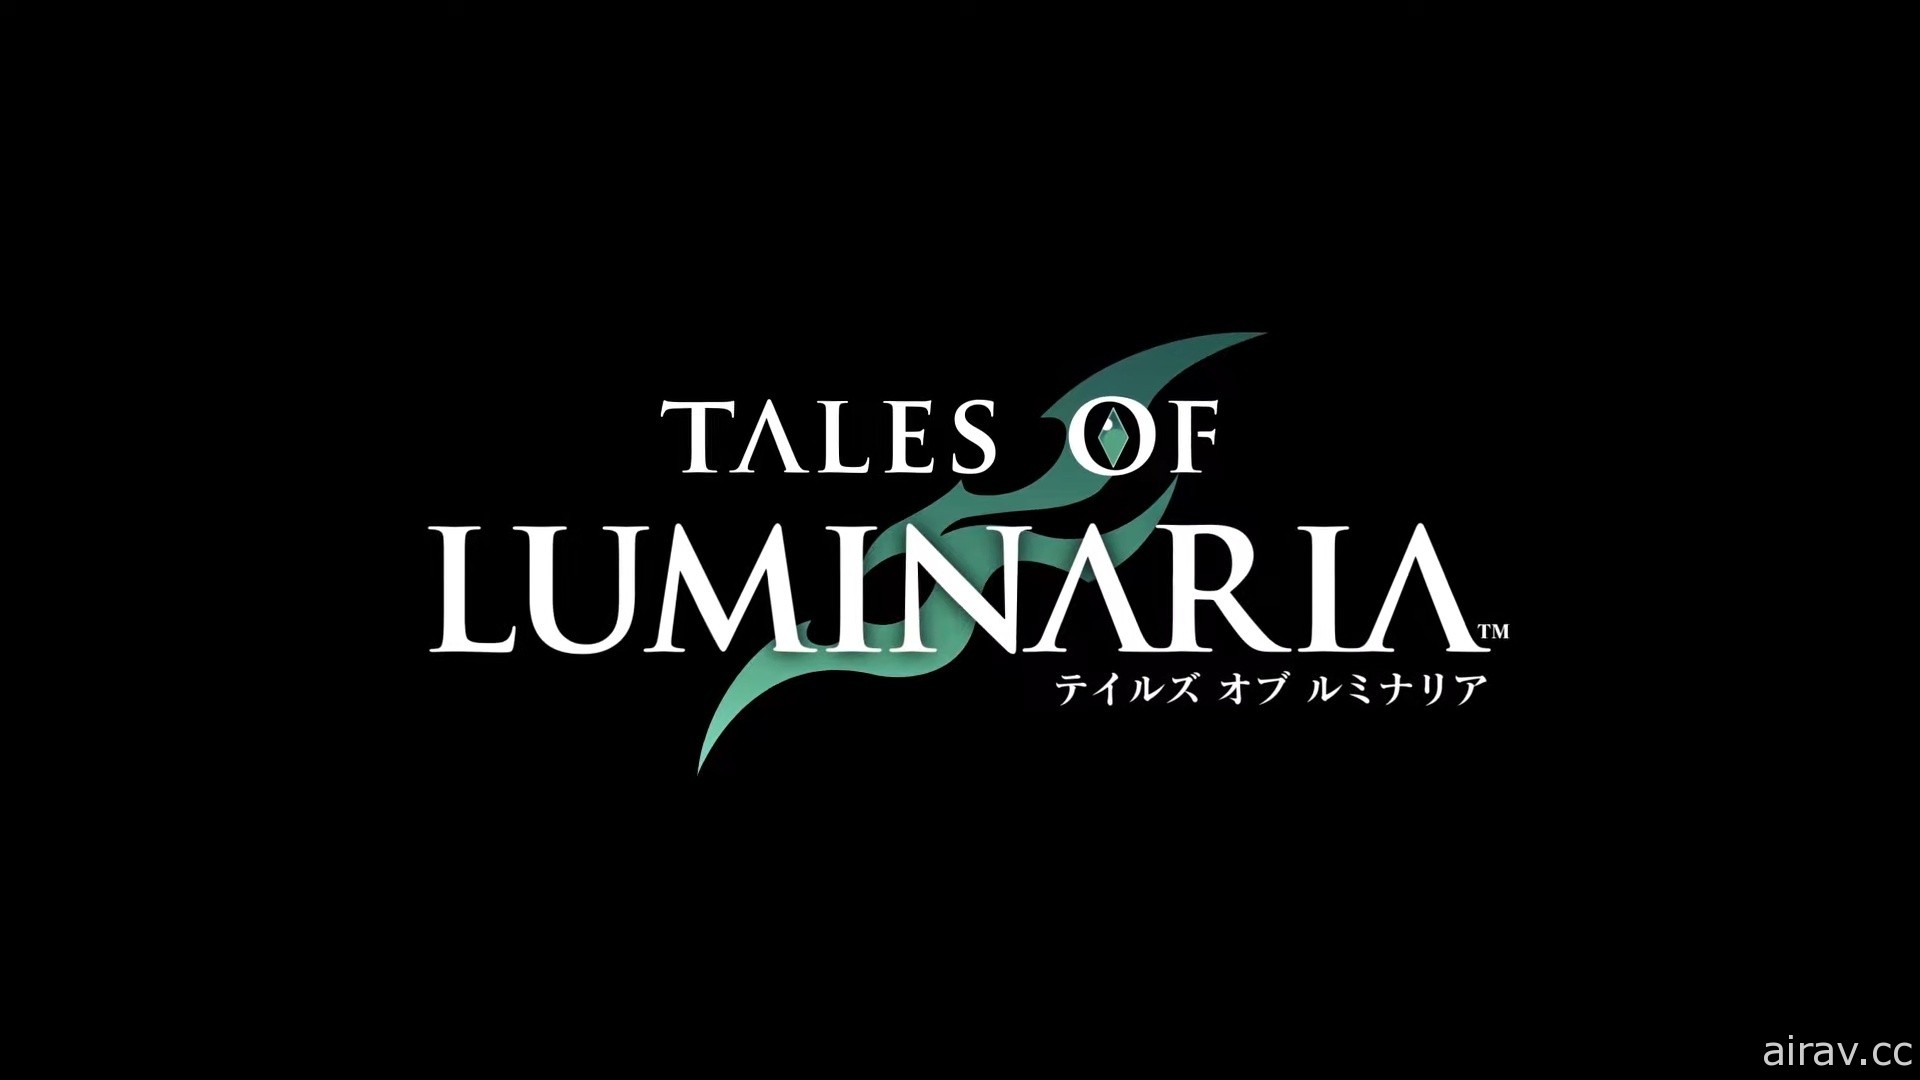 【GC 21】《傳奇》系列手機新作《Tales of Luminaria》曝光 採直立式 3D ARPG 玩法